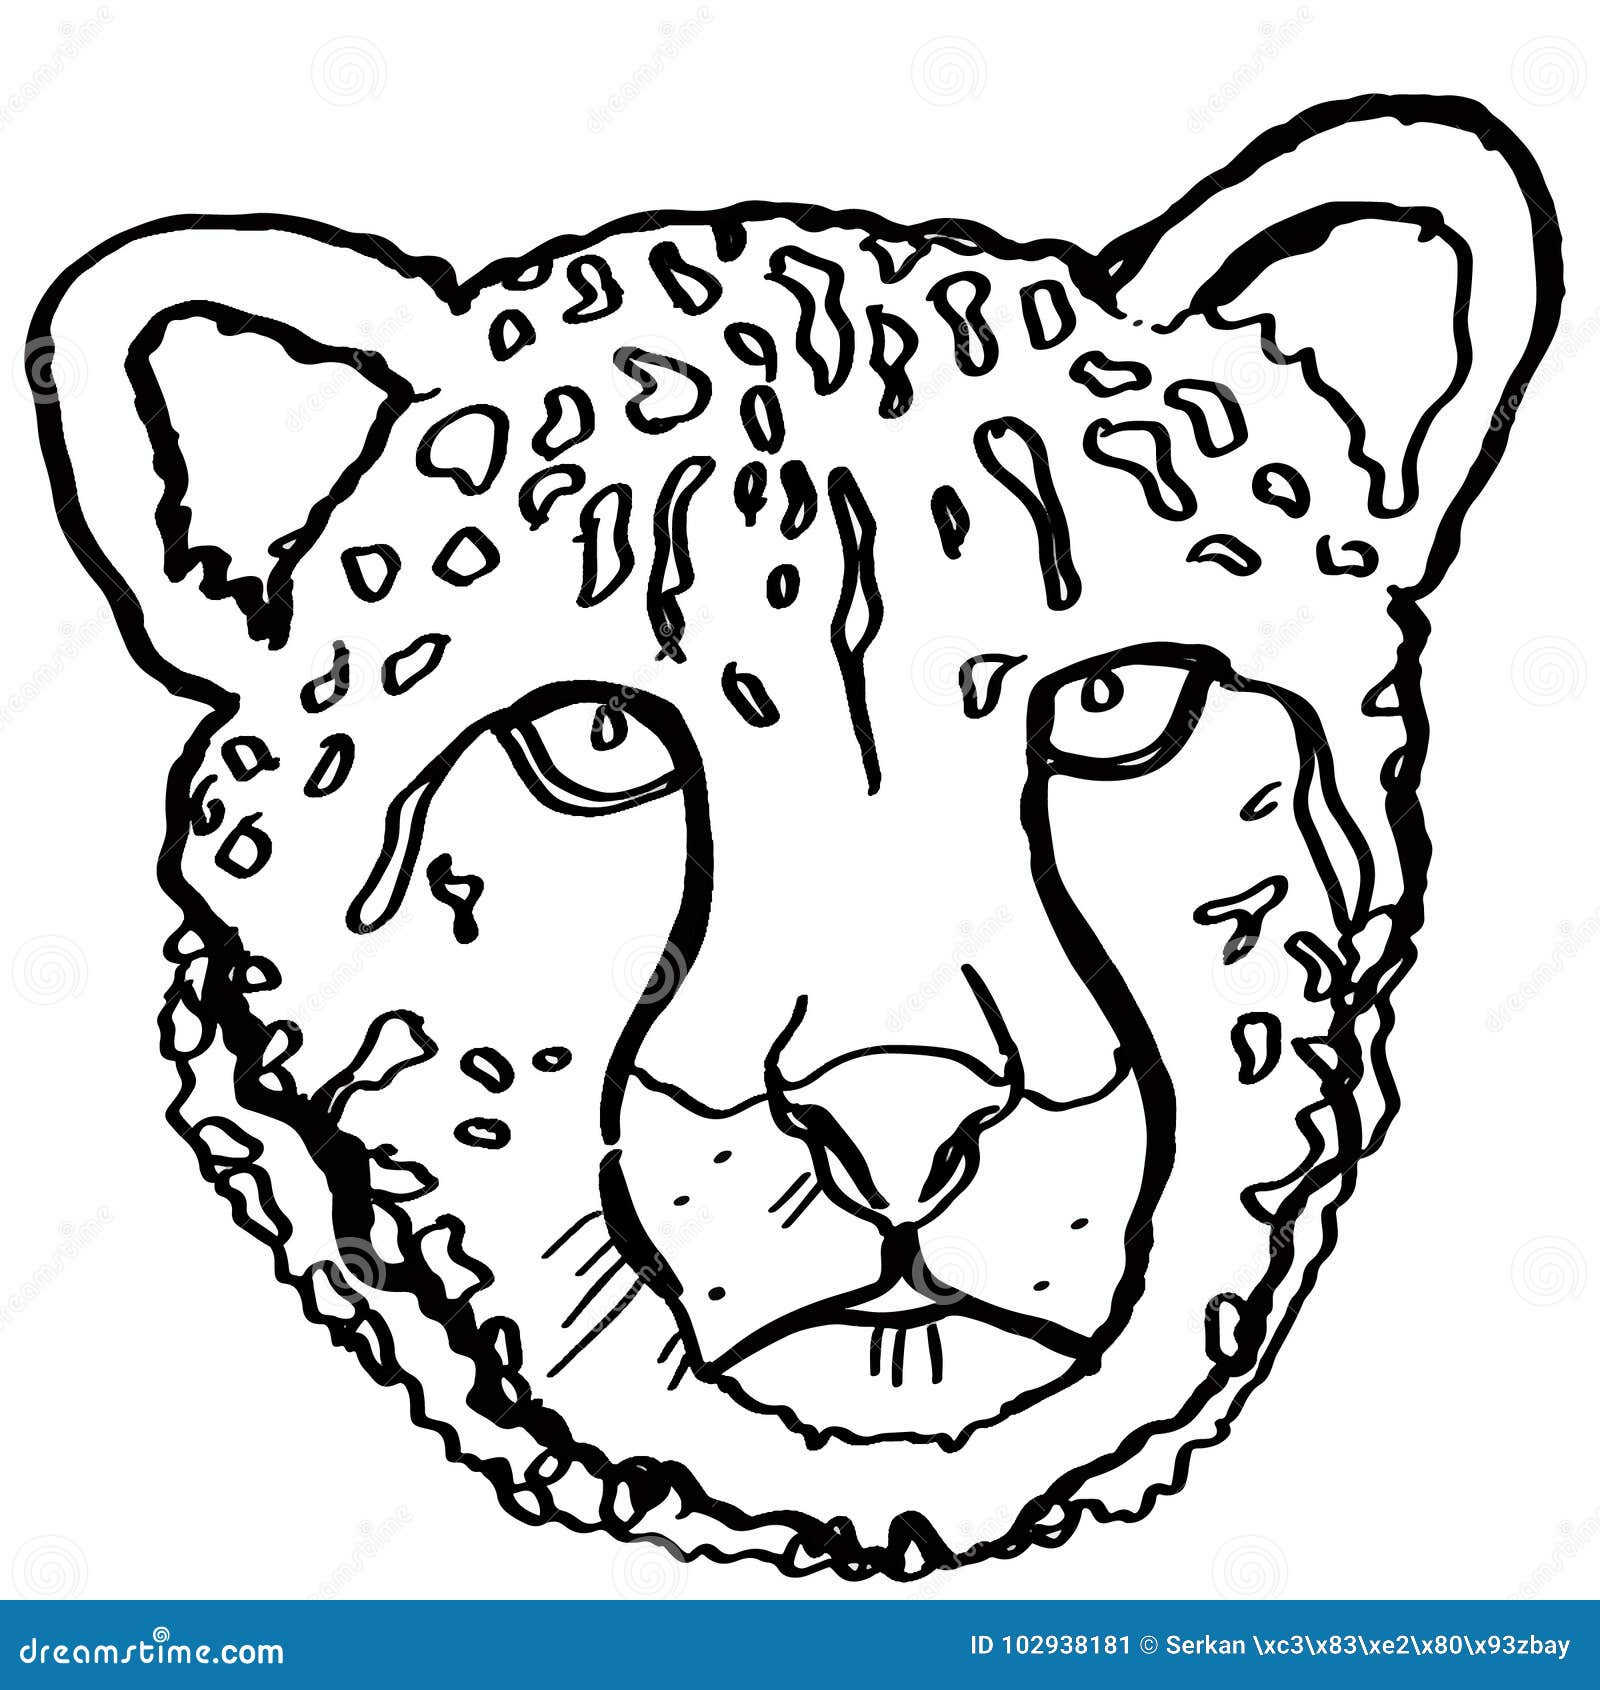 Watercolor painting of a cheetah's head on Craiyon